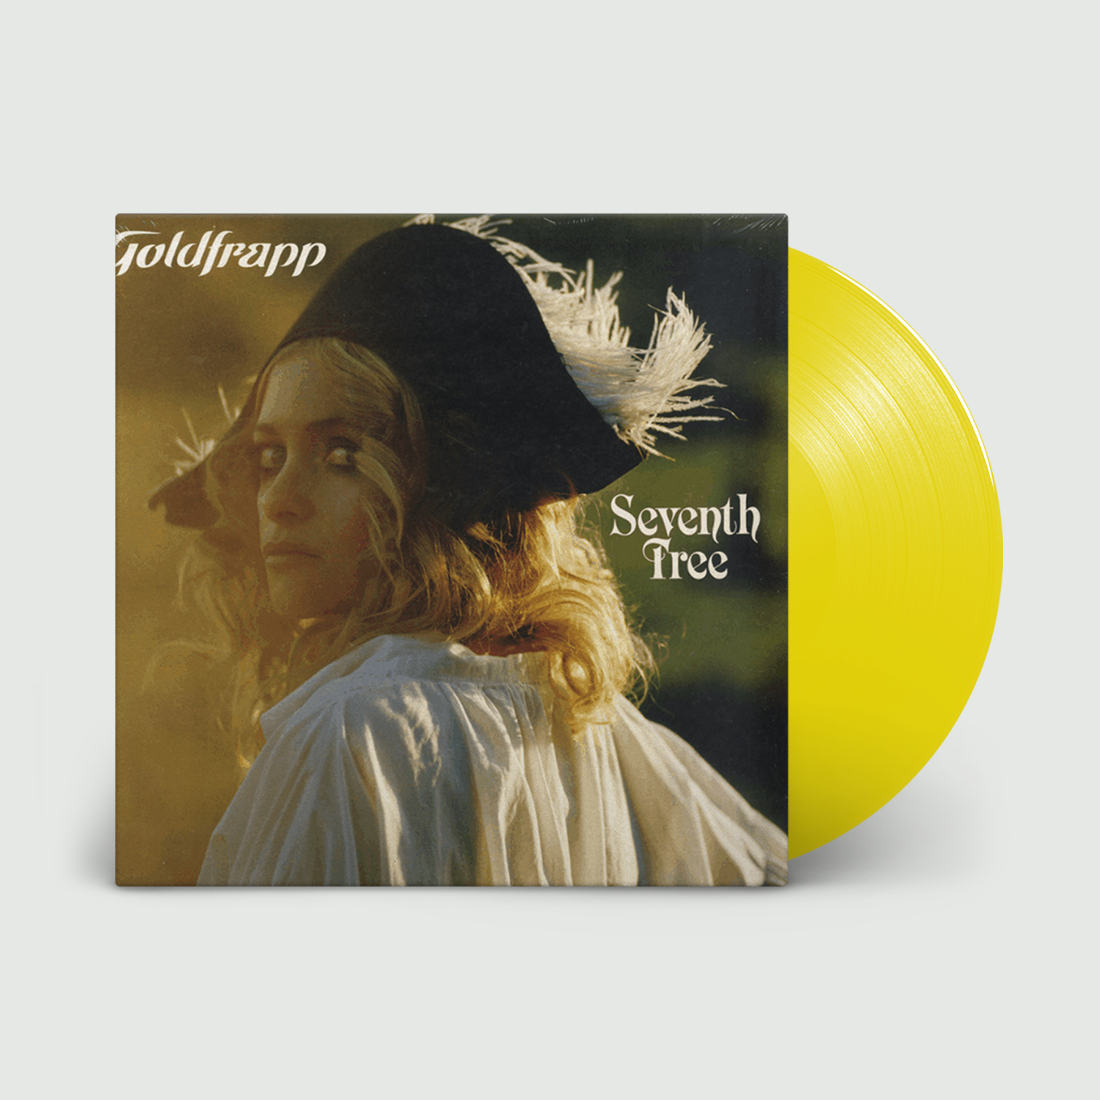 Goldfrapp - Seventh Tree: Limited Yellow Vinyl LP